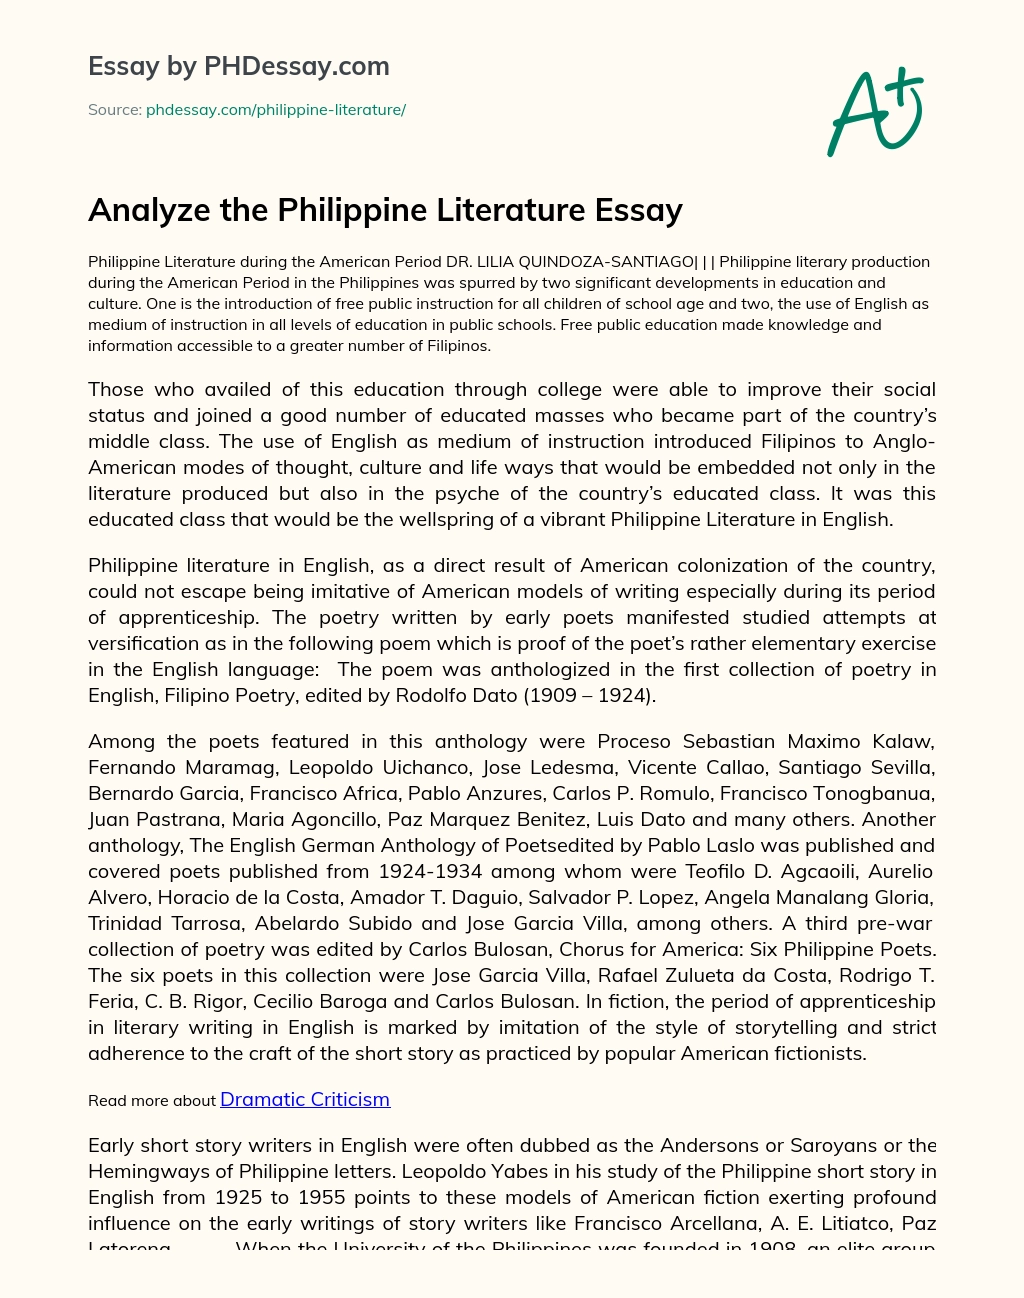 characteristics of philippine literature in american period